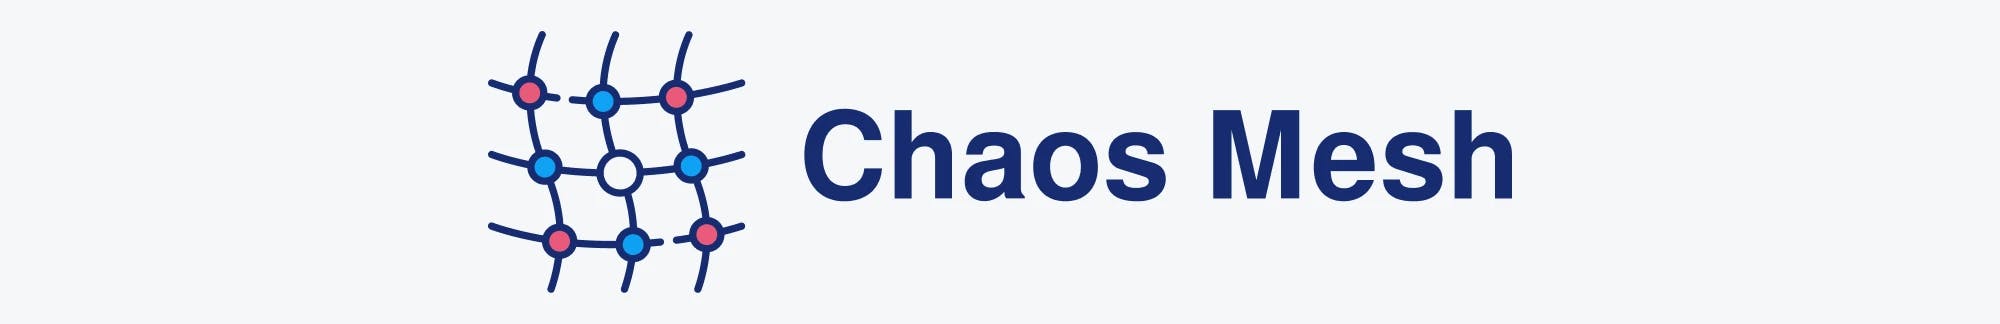 Chaos Mesh logo